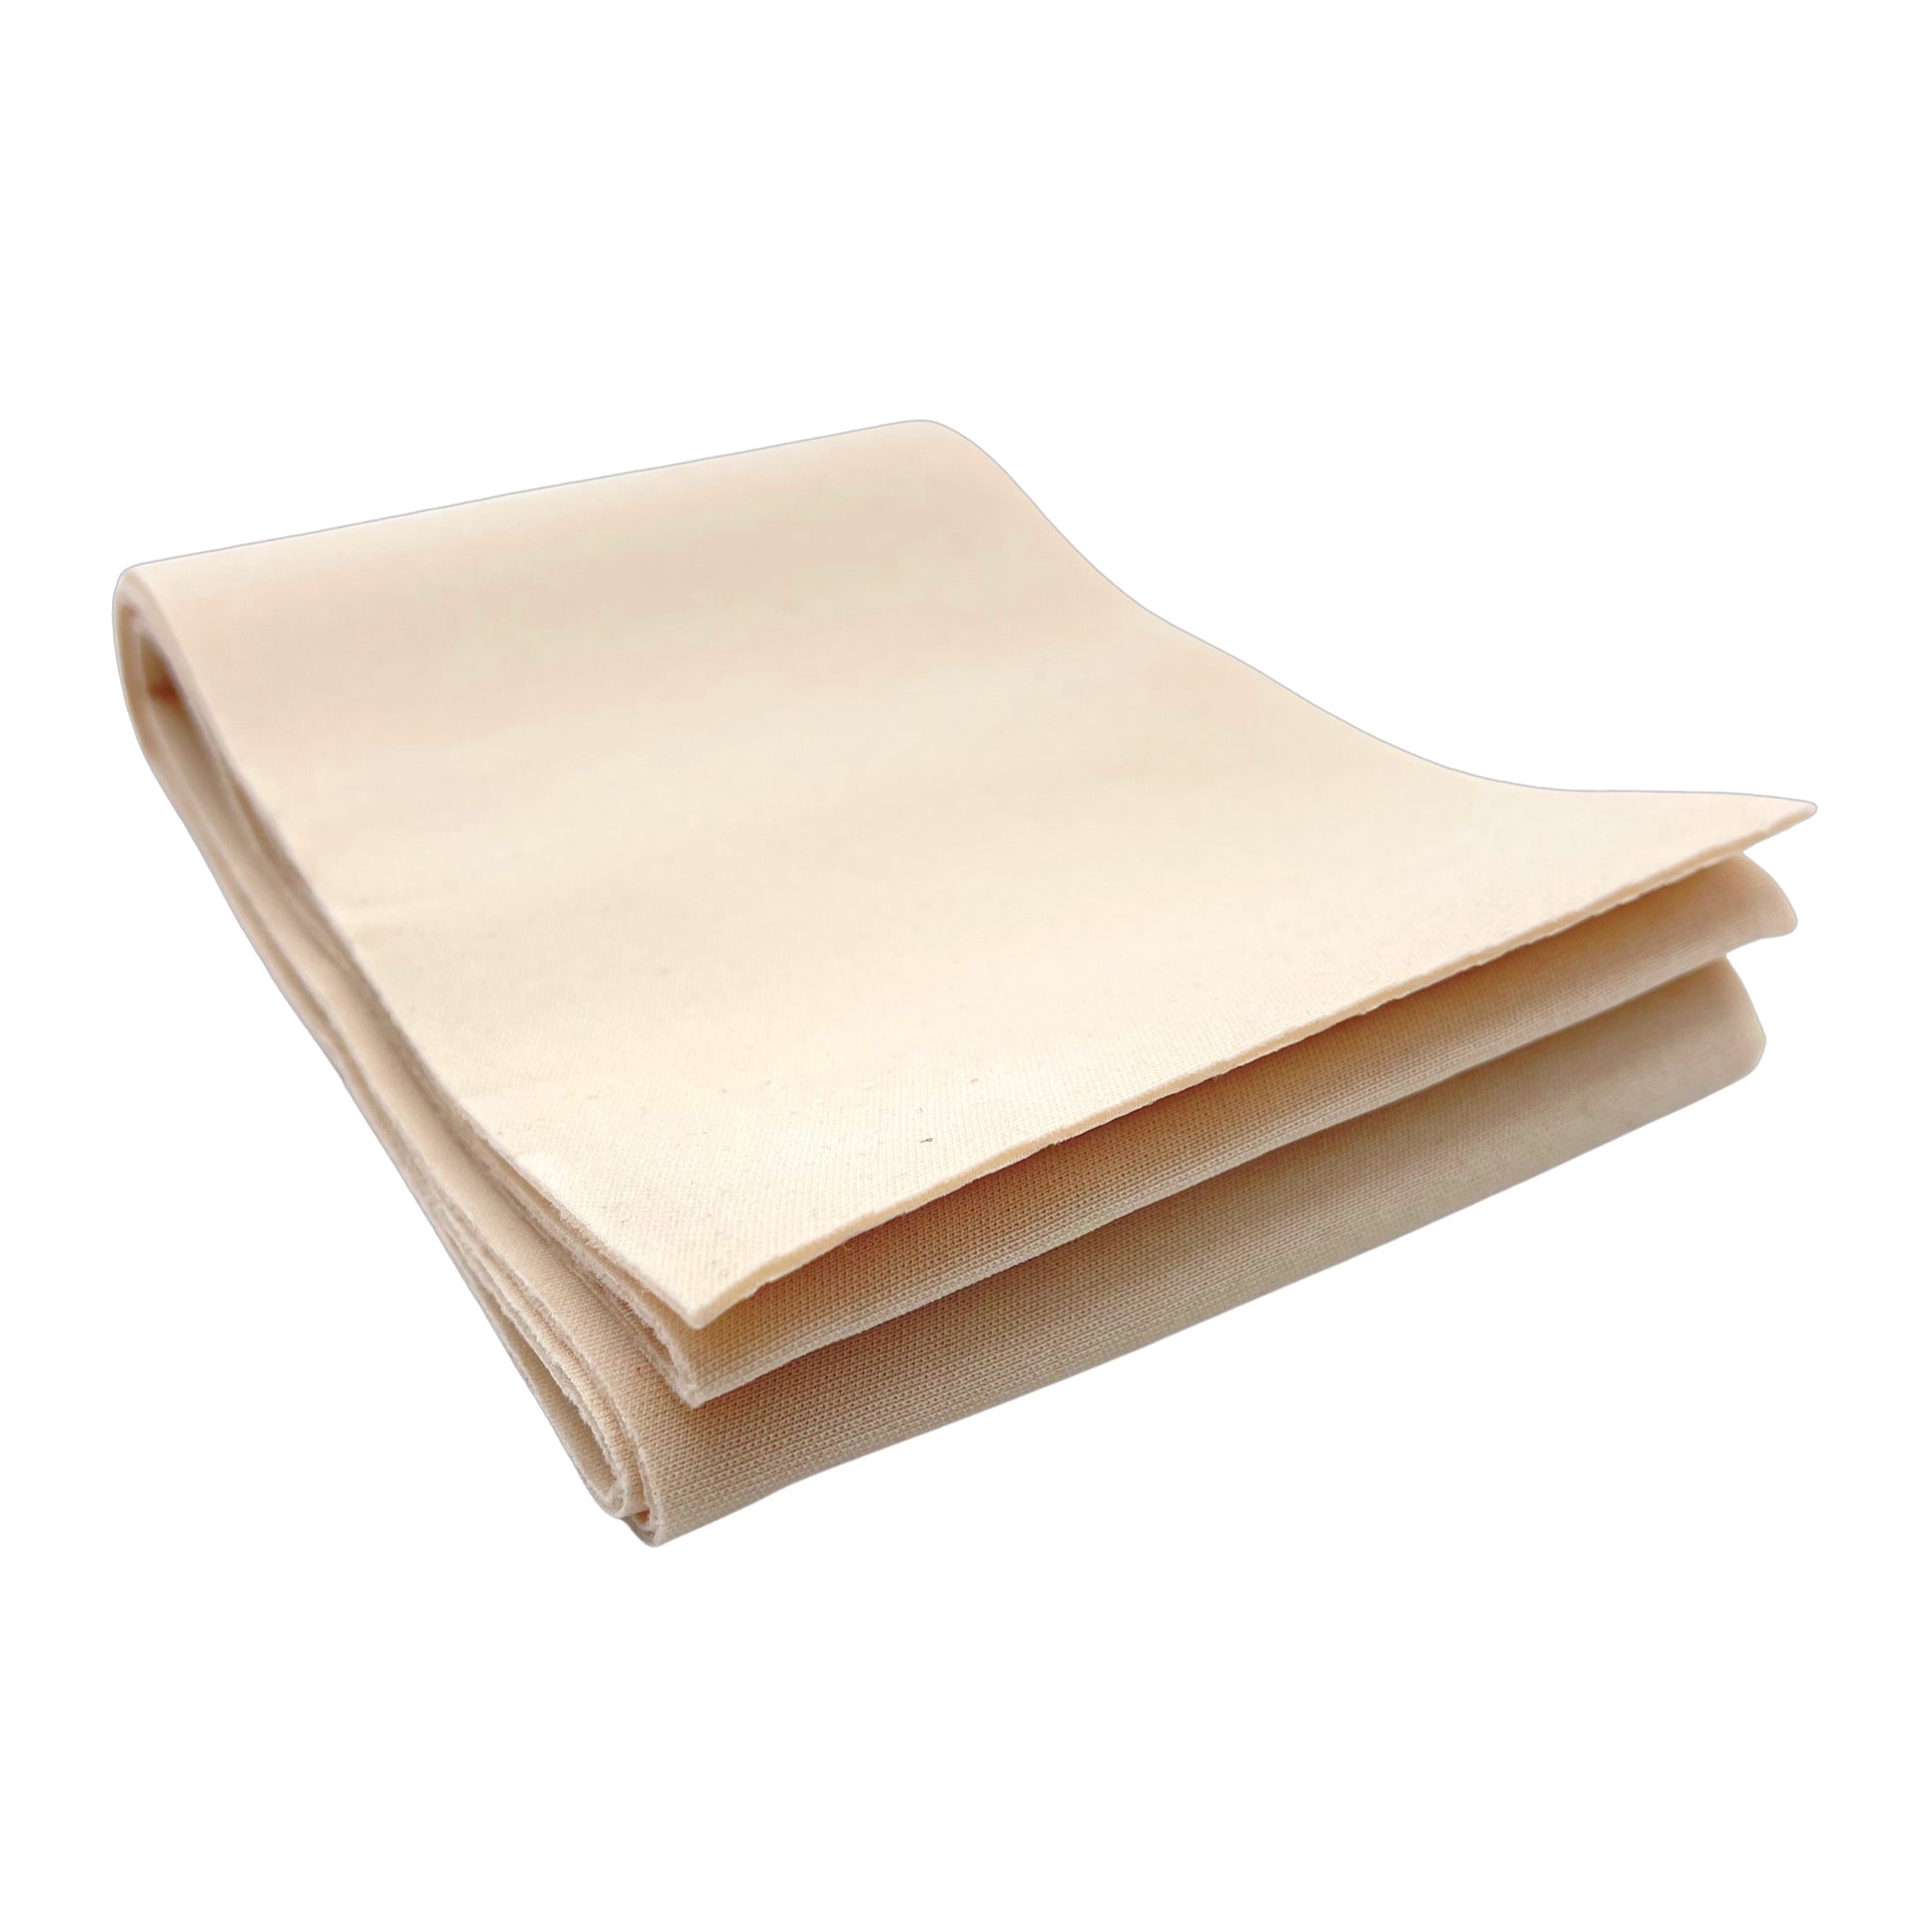 Folded neoprene fabric strip in the color ivory beige mocha.